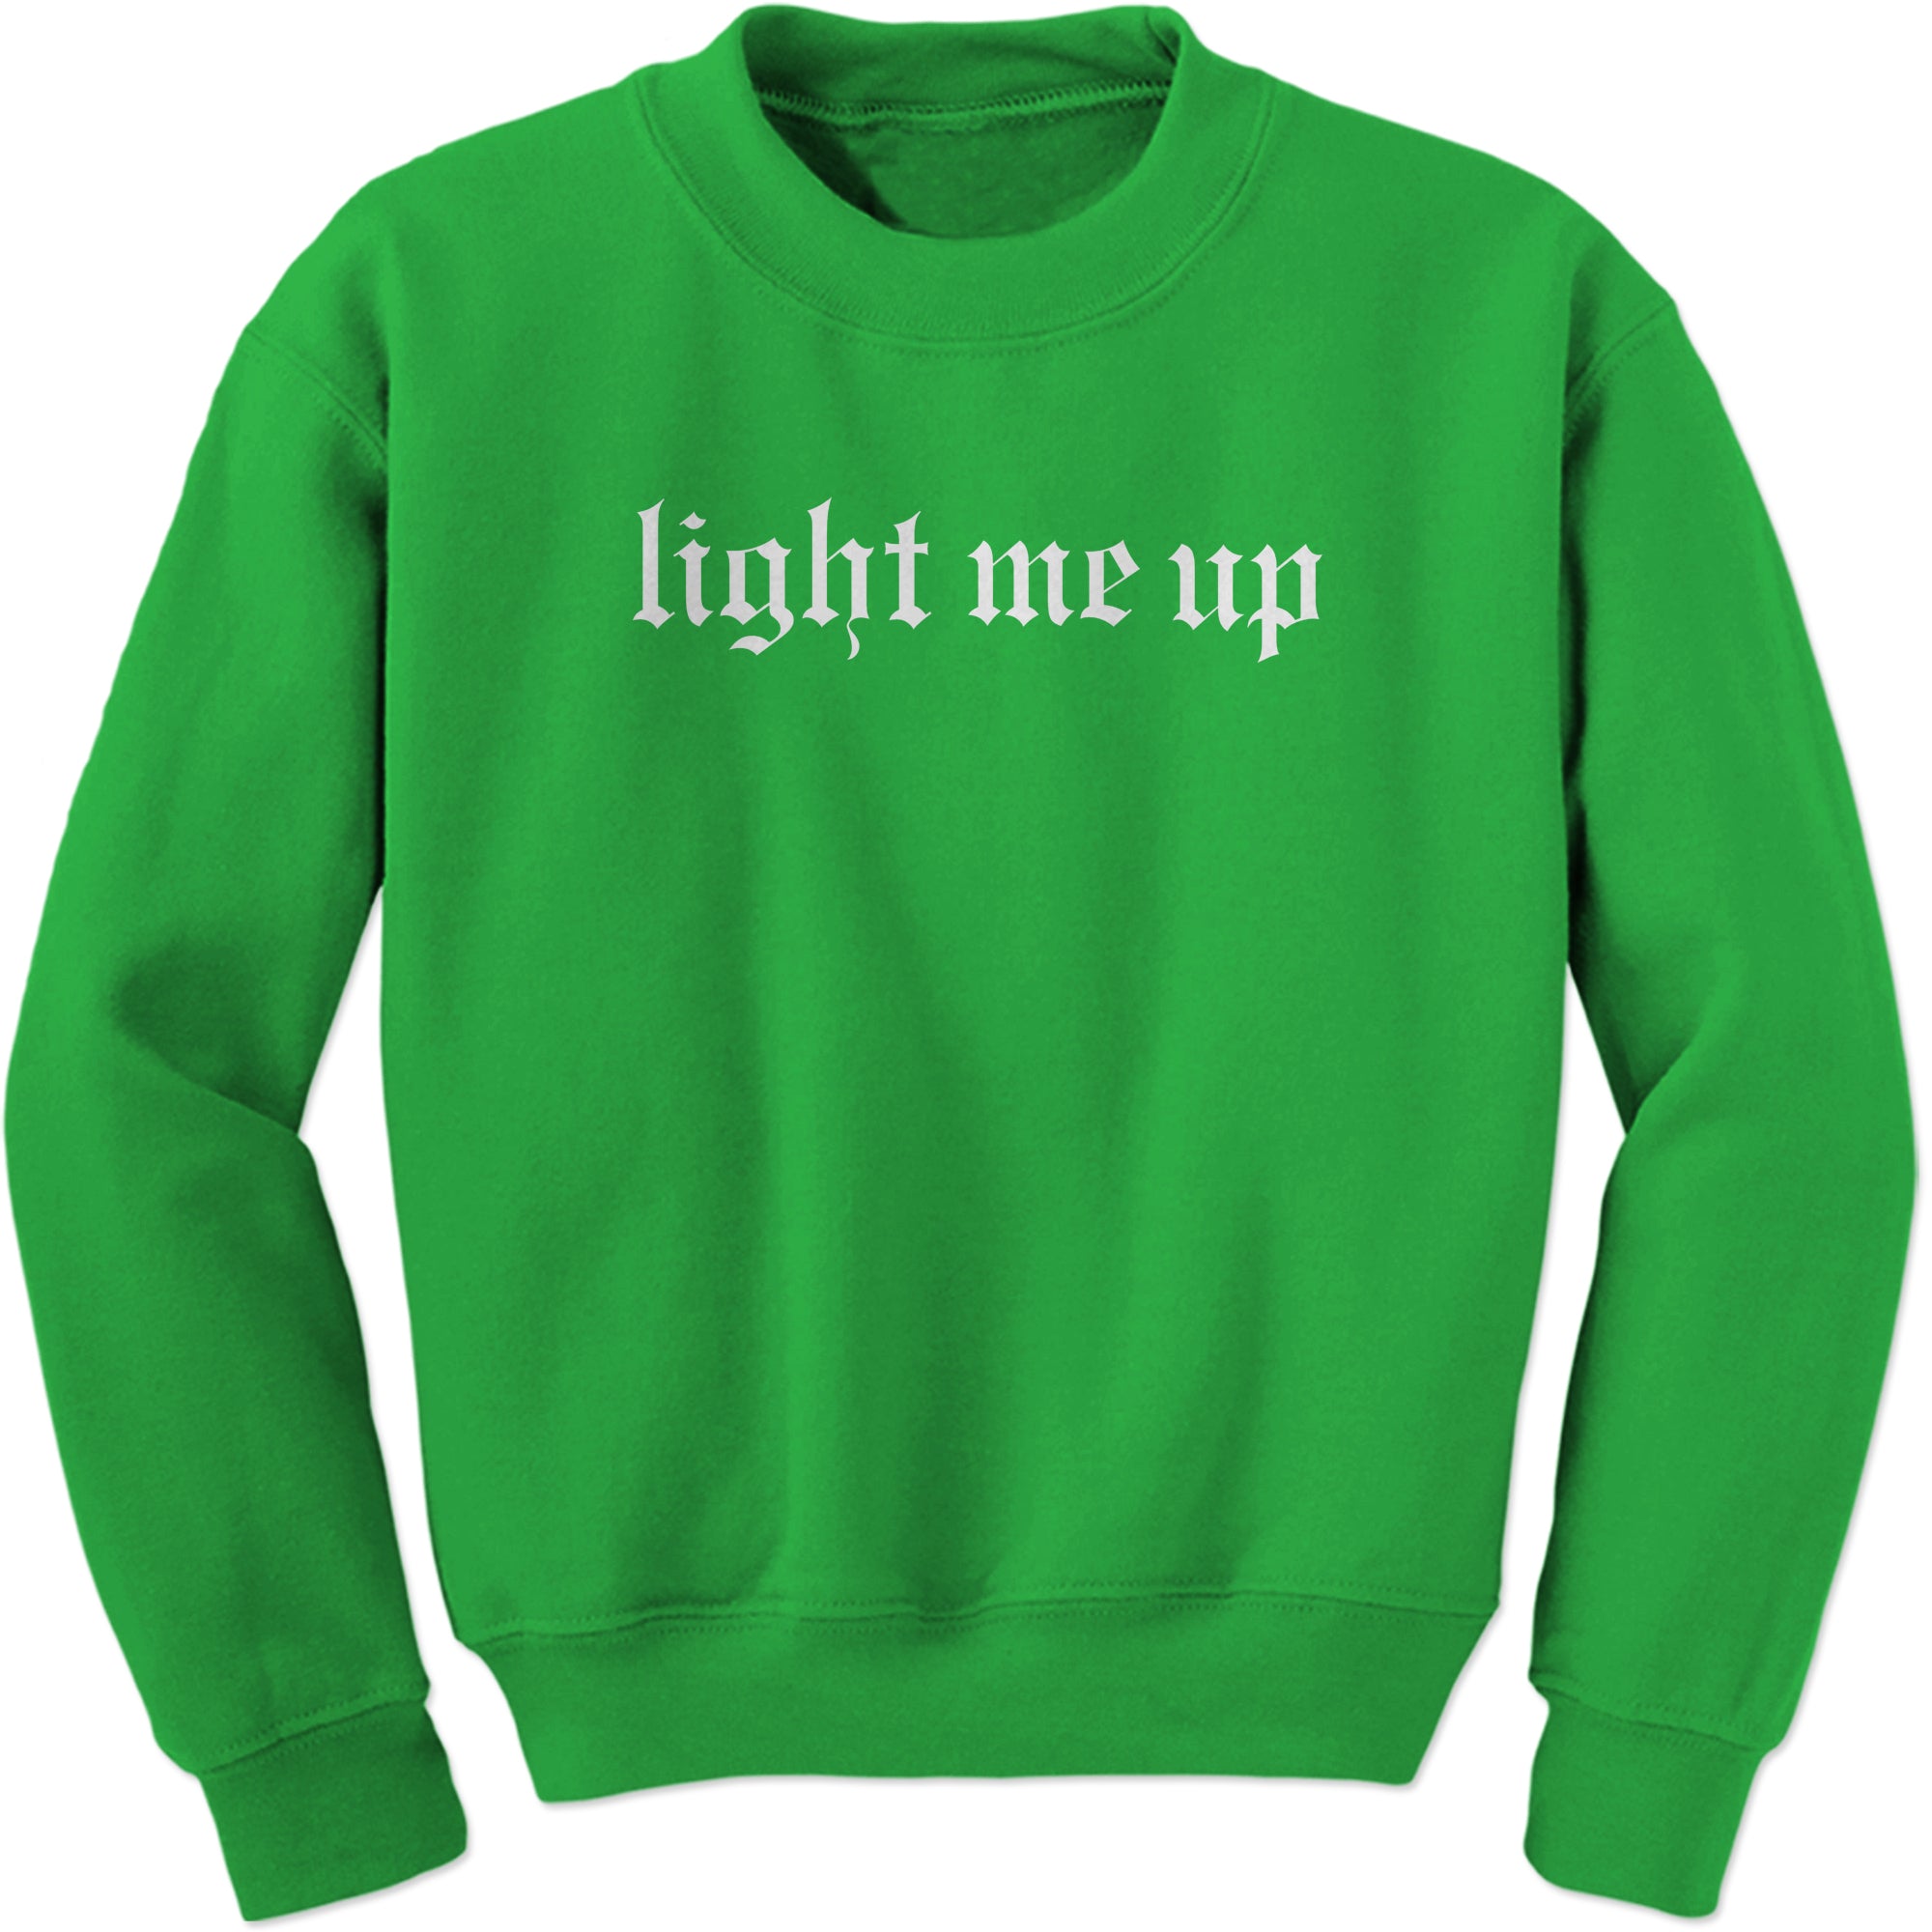 Light-Me-Up-(White)-Sweatshirt